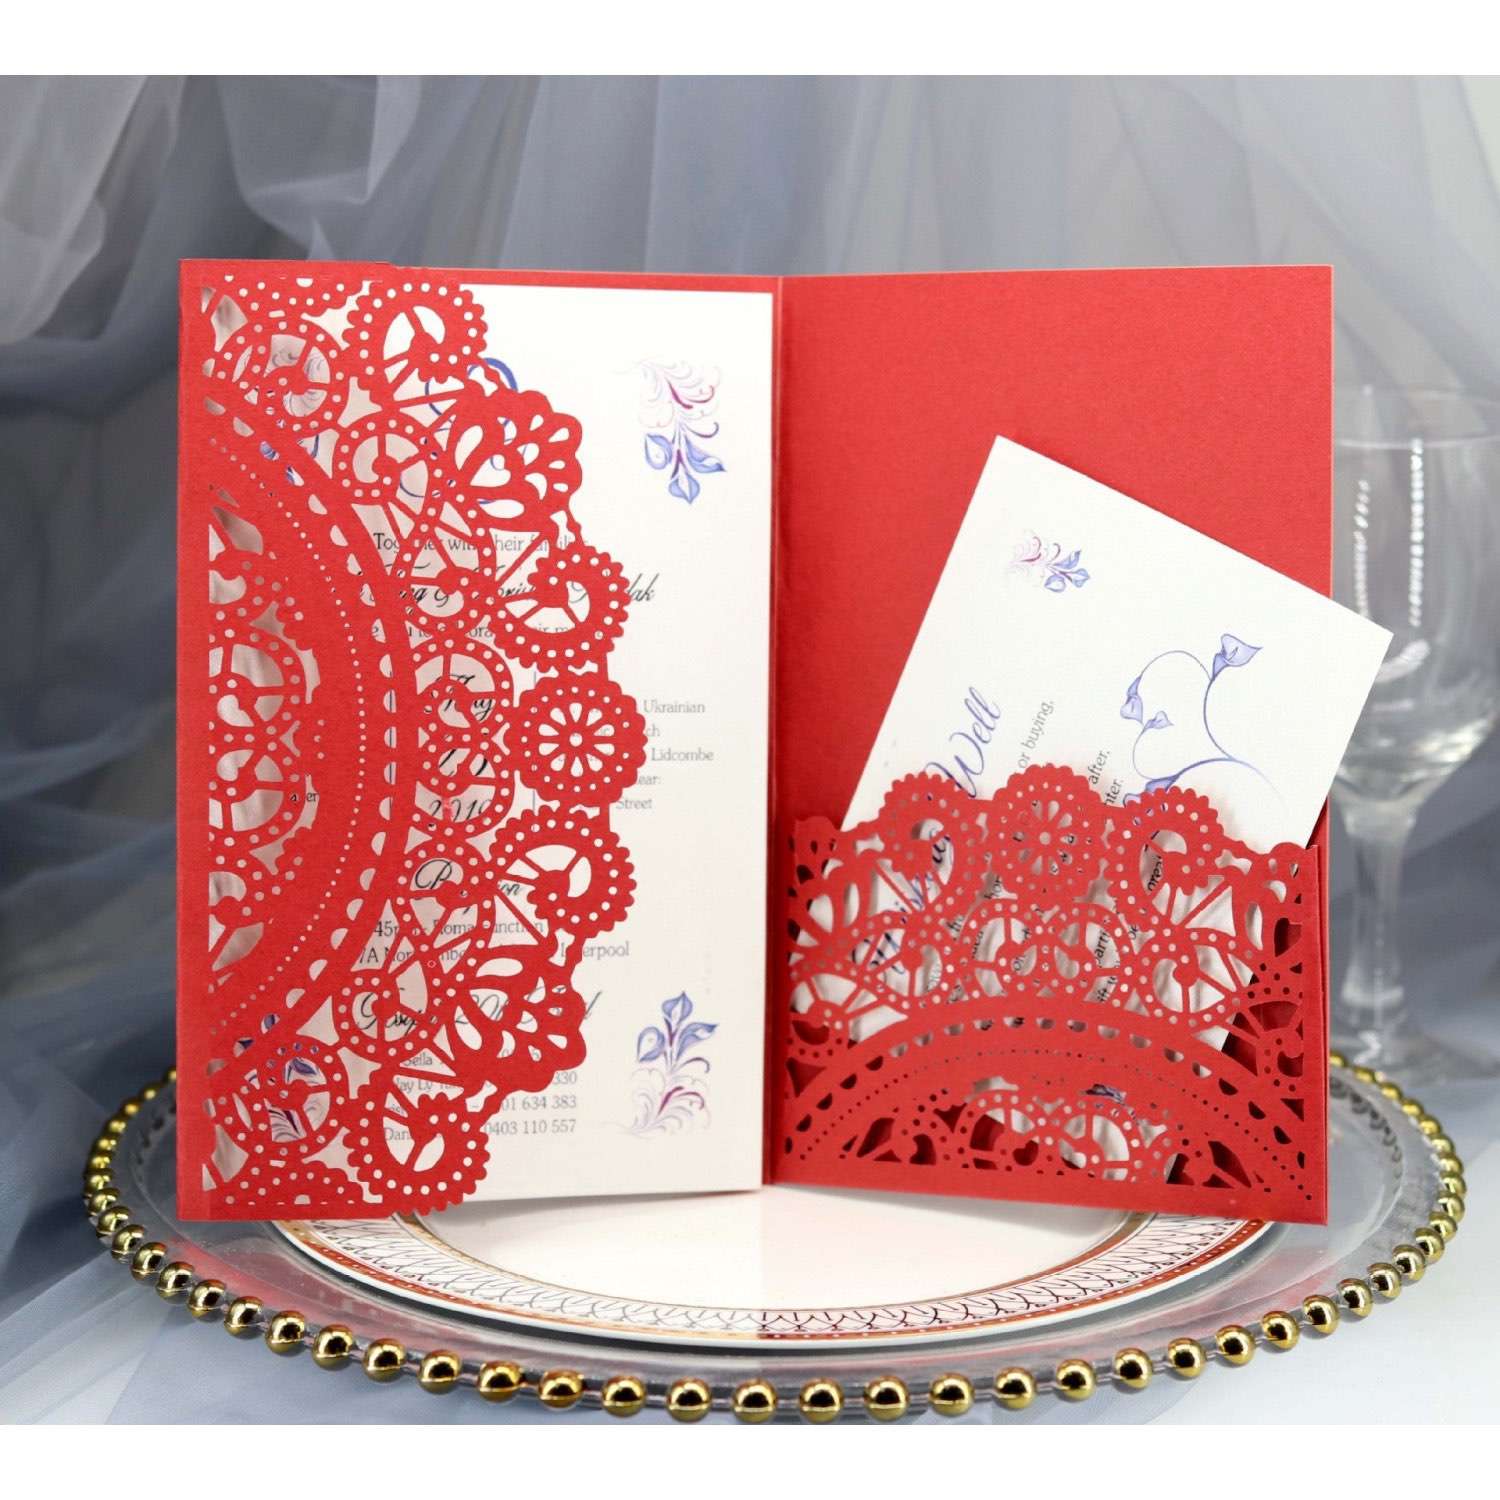 Slap-up Marriage Invitation Card Business Invitation Laser Wedding Cards